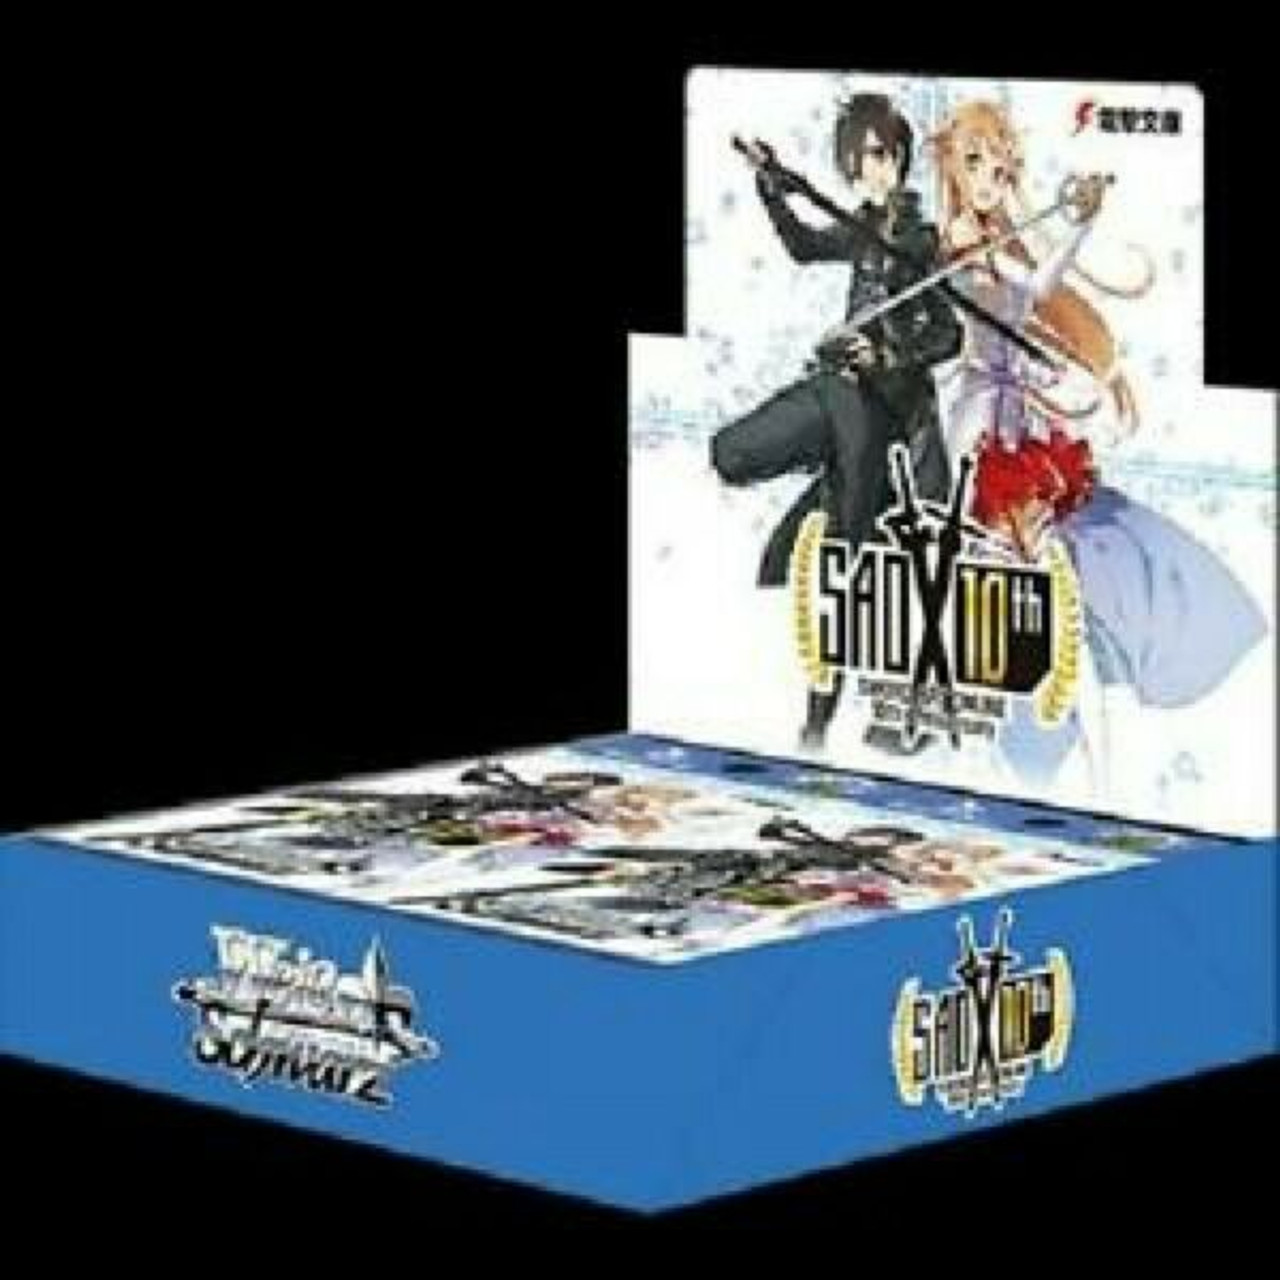 Weiss Schwarz Booster Pack Anime Sword Art Online 10th Anniversary Box